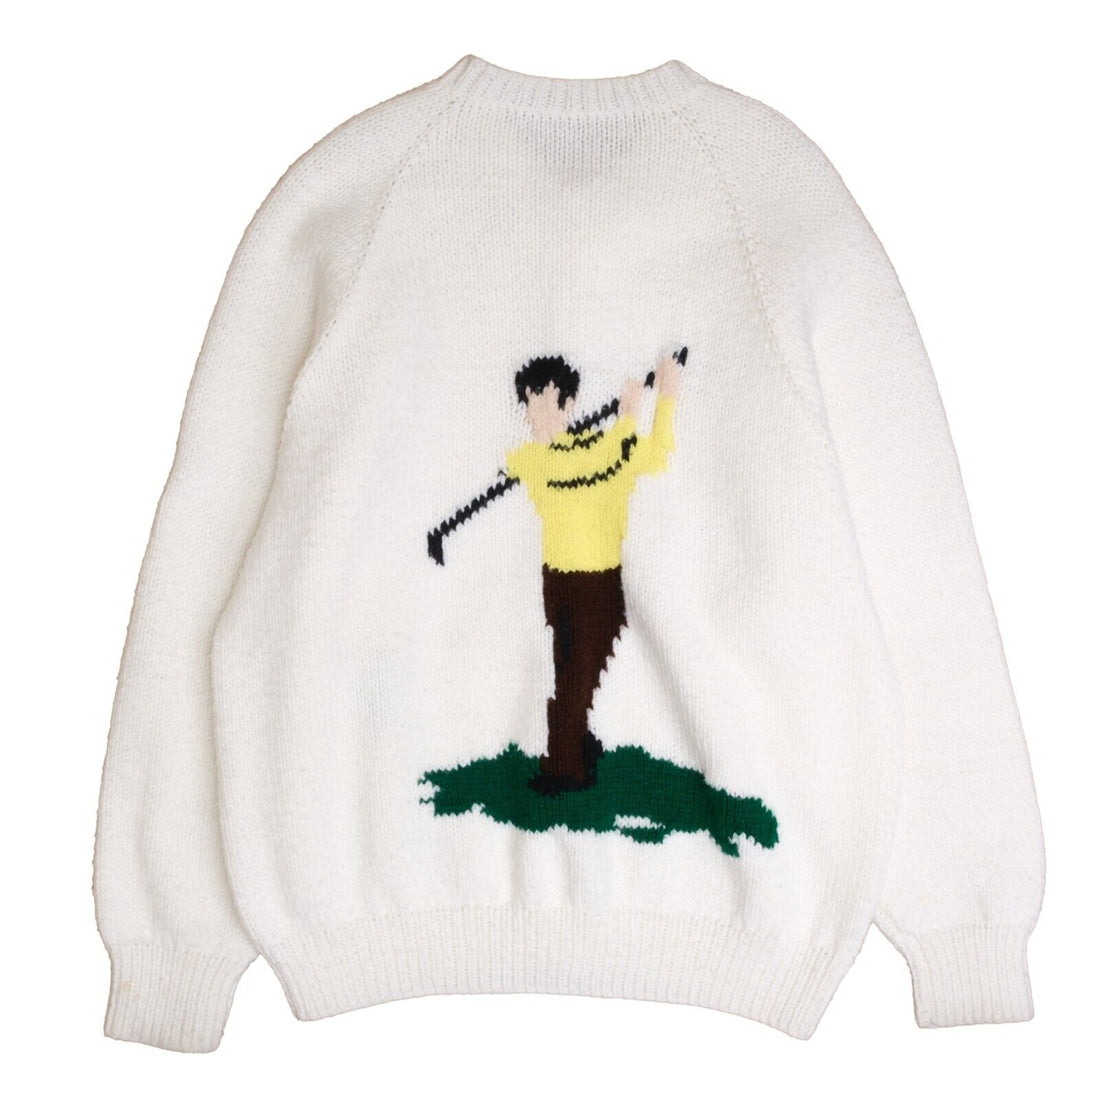 Vintage Golf Wool Knit Cardigan Sweater Size XL